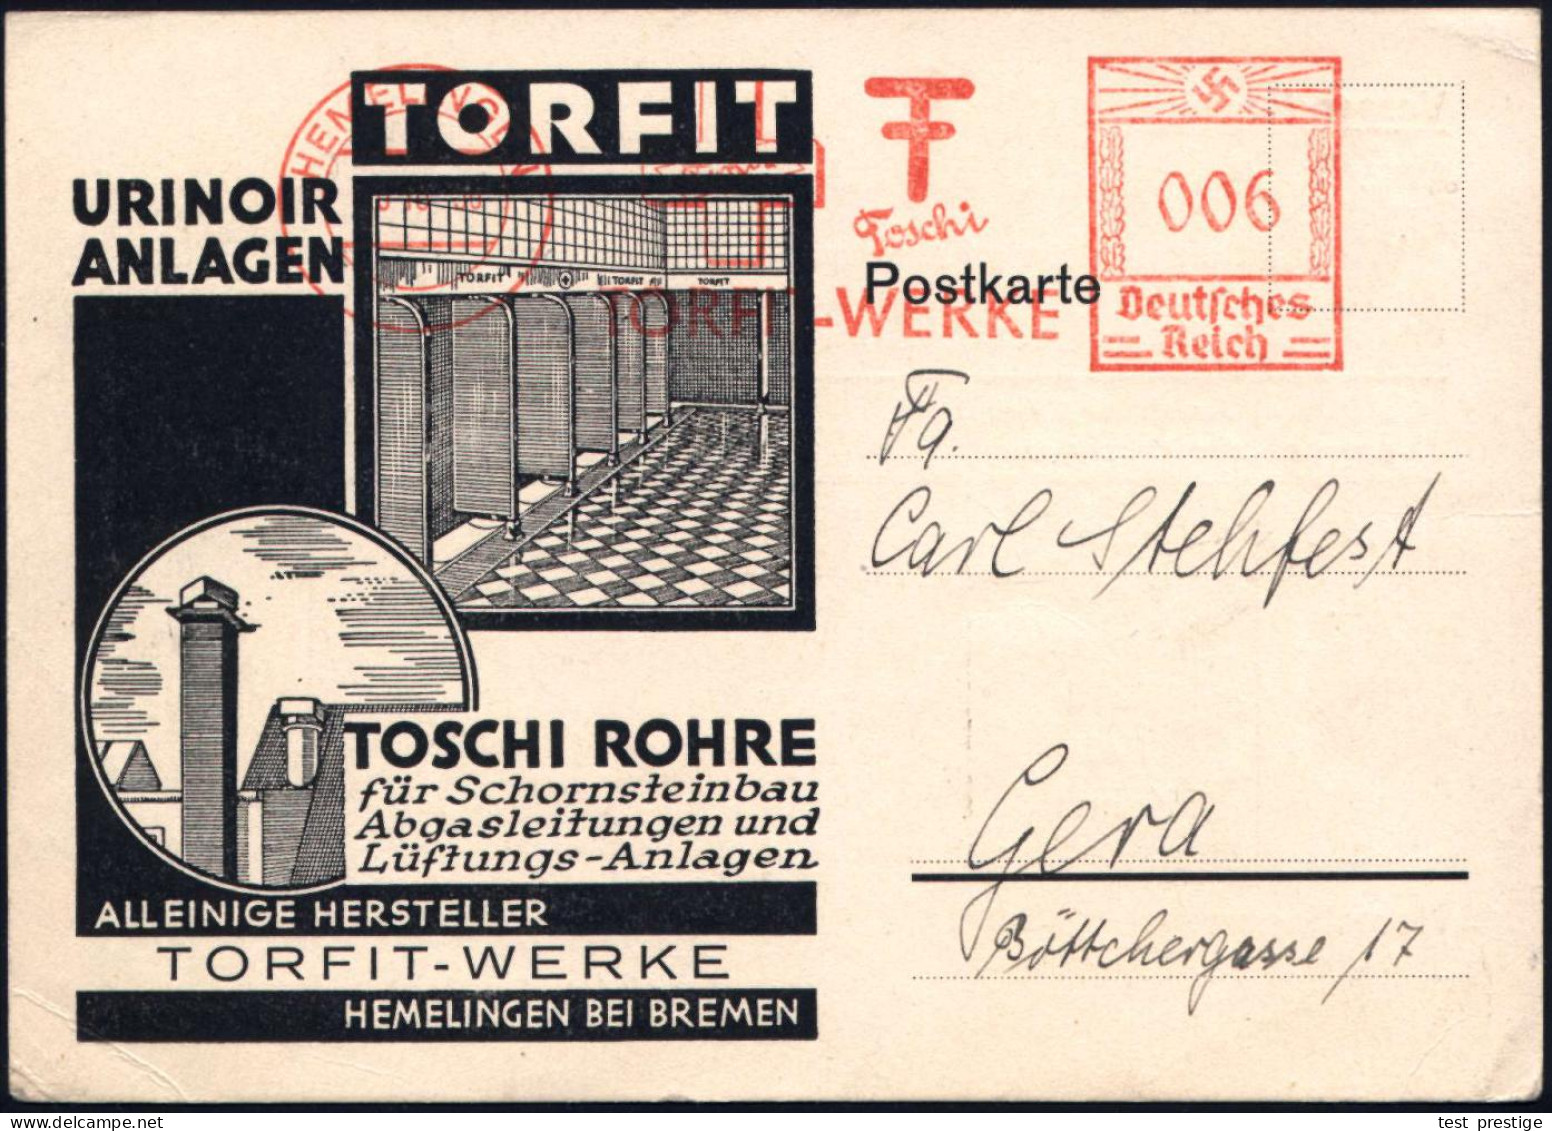 HEMELINGEN/ Toschi/ TORFIT-WERKE 1936 (16.10.) AFS Francotyp (Monogr.) Dekorative Reklame-Kt.: Urinoir, Schornstein-Abga - Firemen